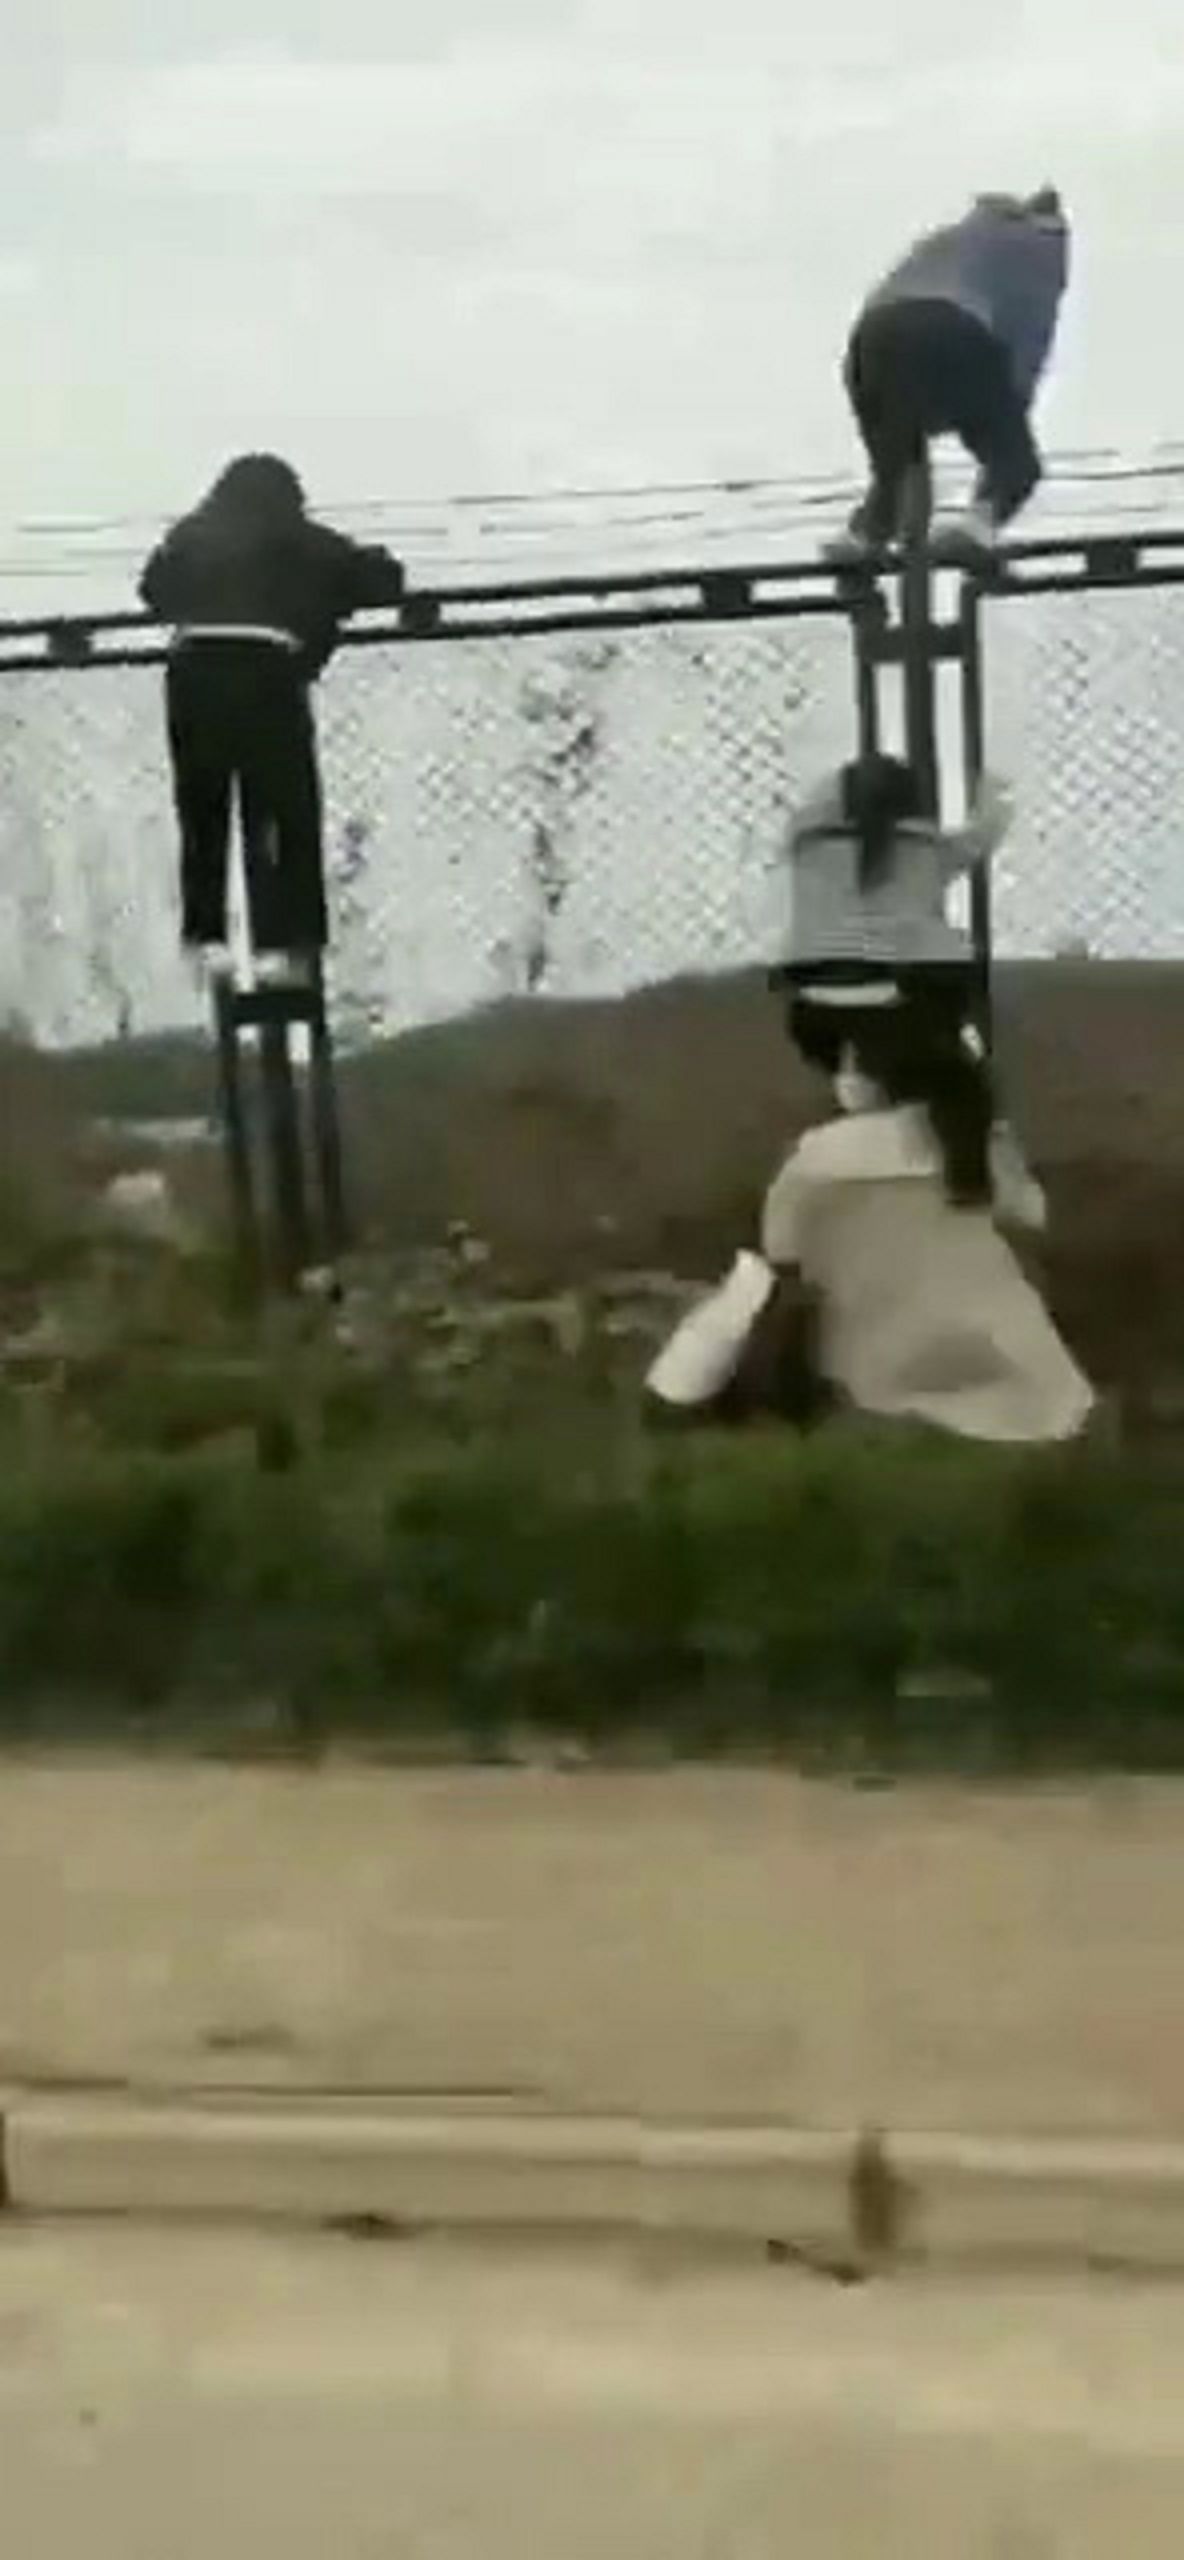 Rekaman menunjukkan pekerja melompati pagar saat mereka melarikan diri dari pabrik iPhone yang besar.  